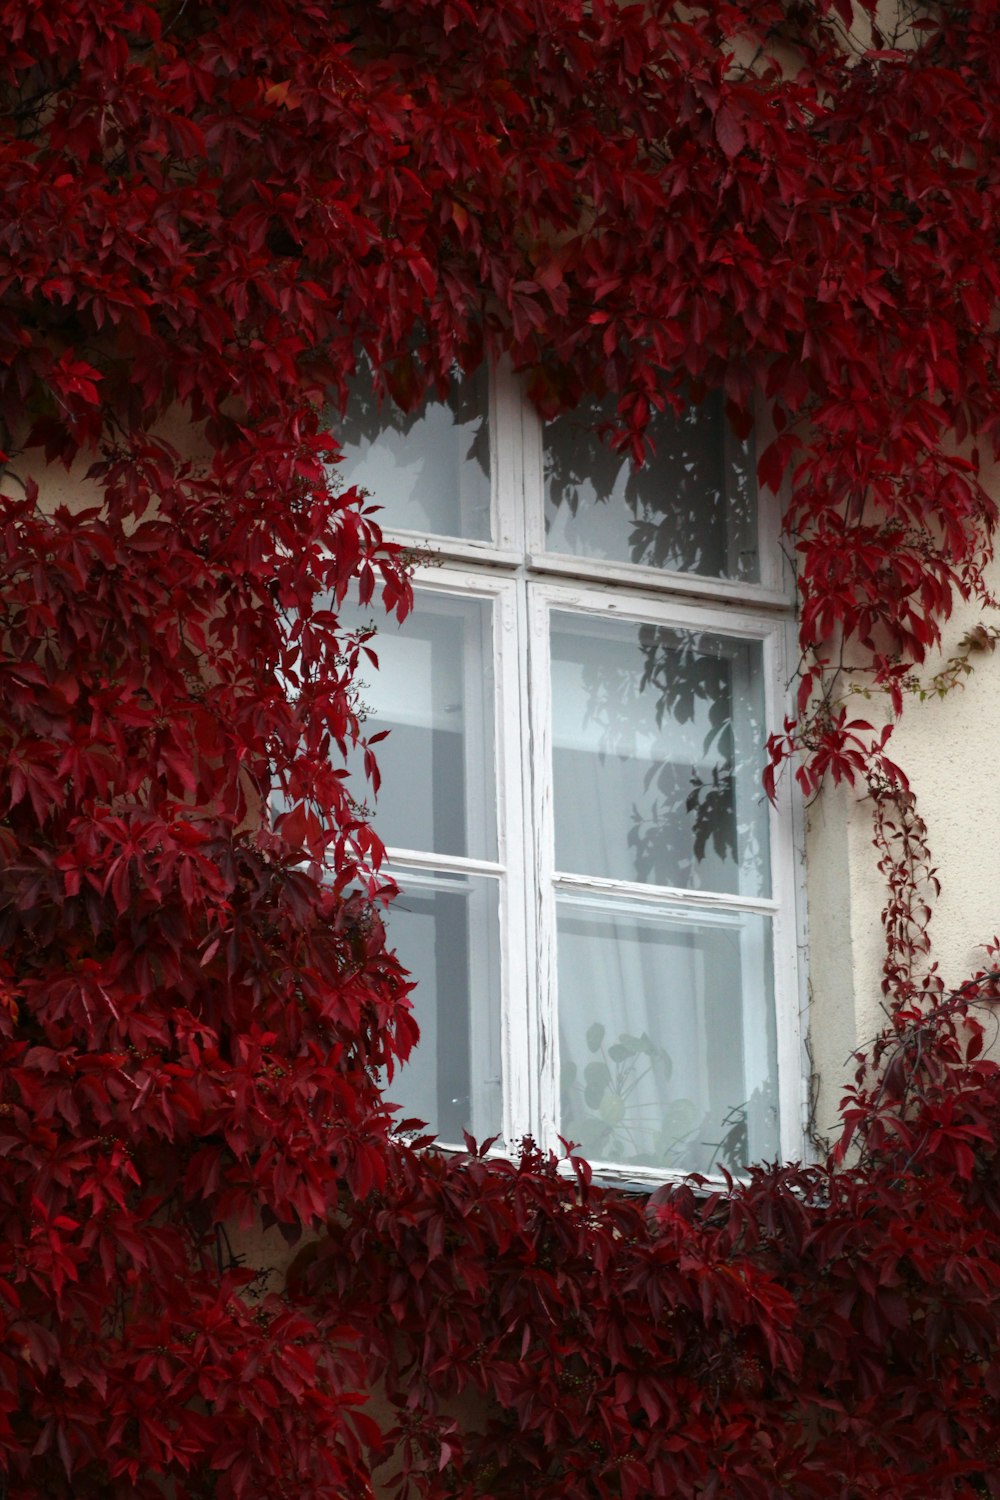 Planta roja y ventana de vidrio blanco